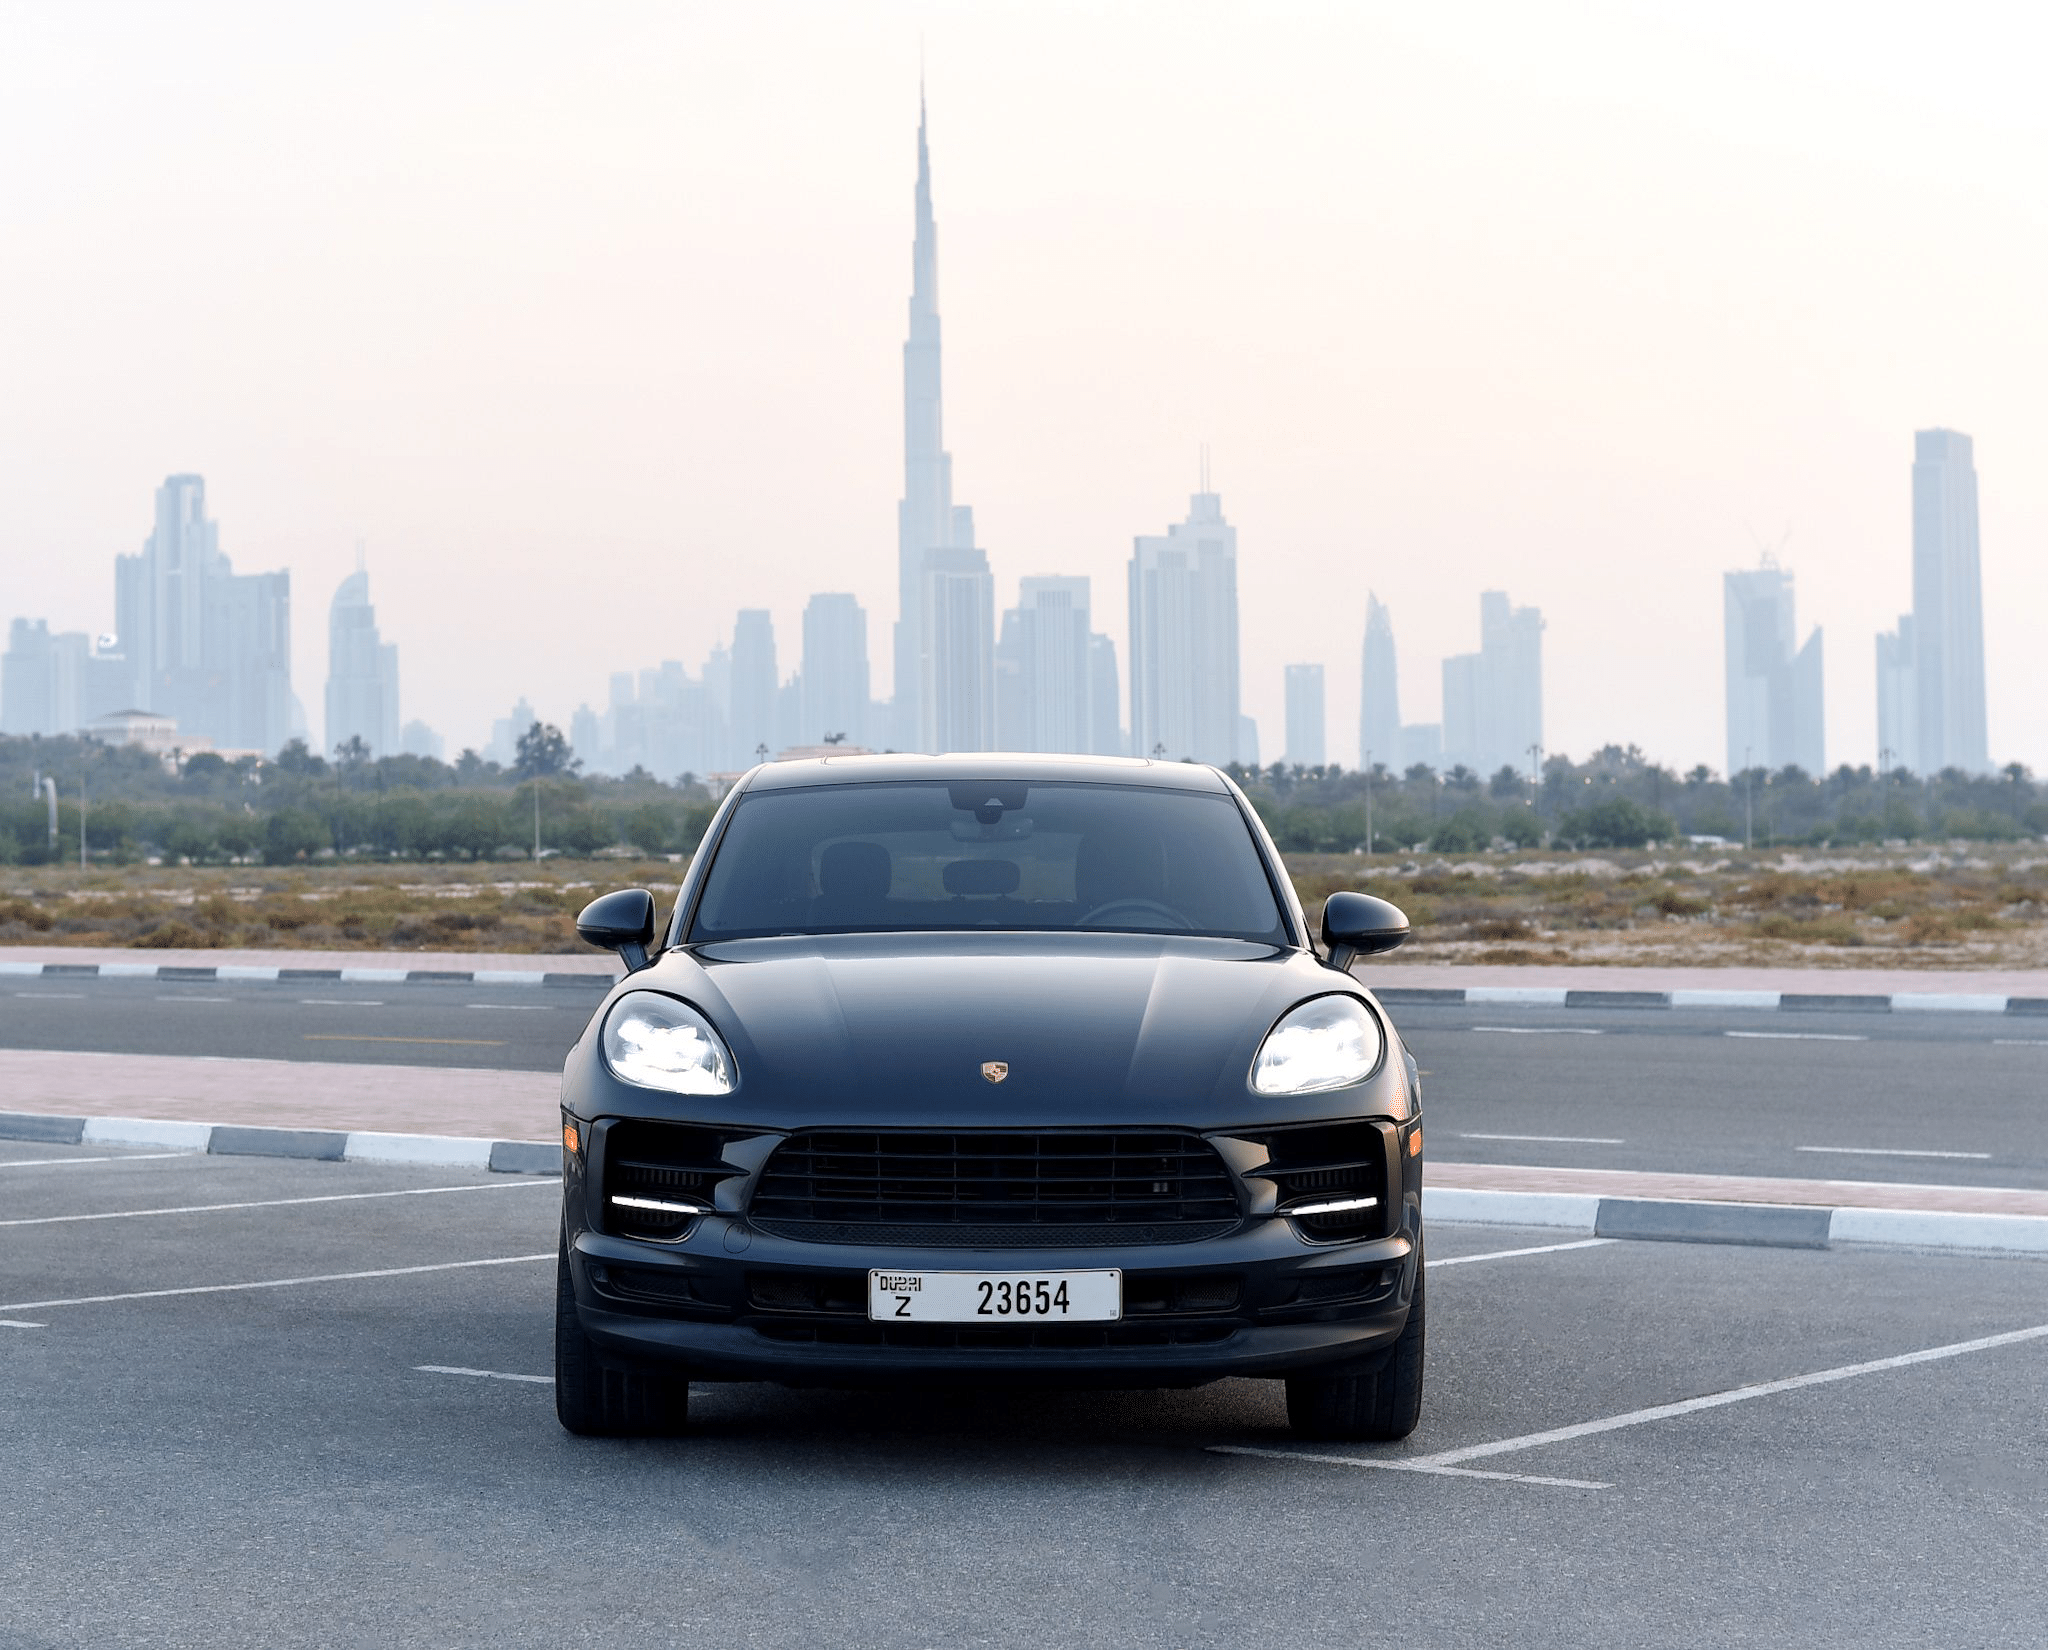 Rent Porsche Macan Dubai